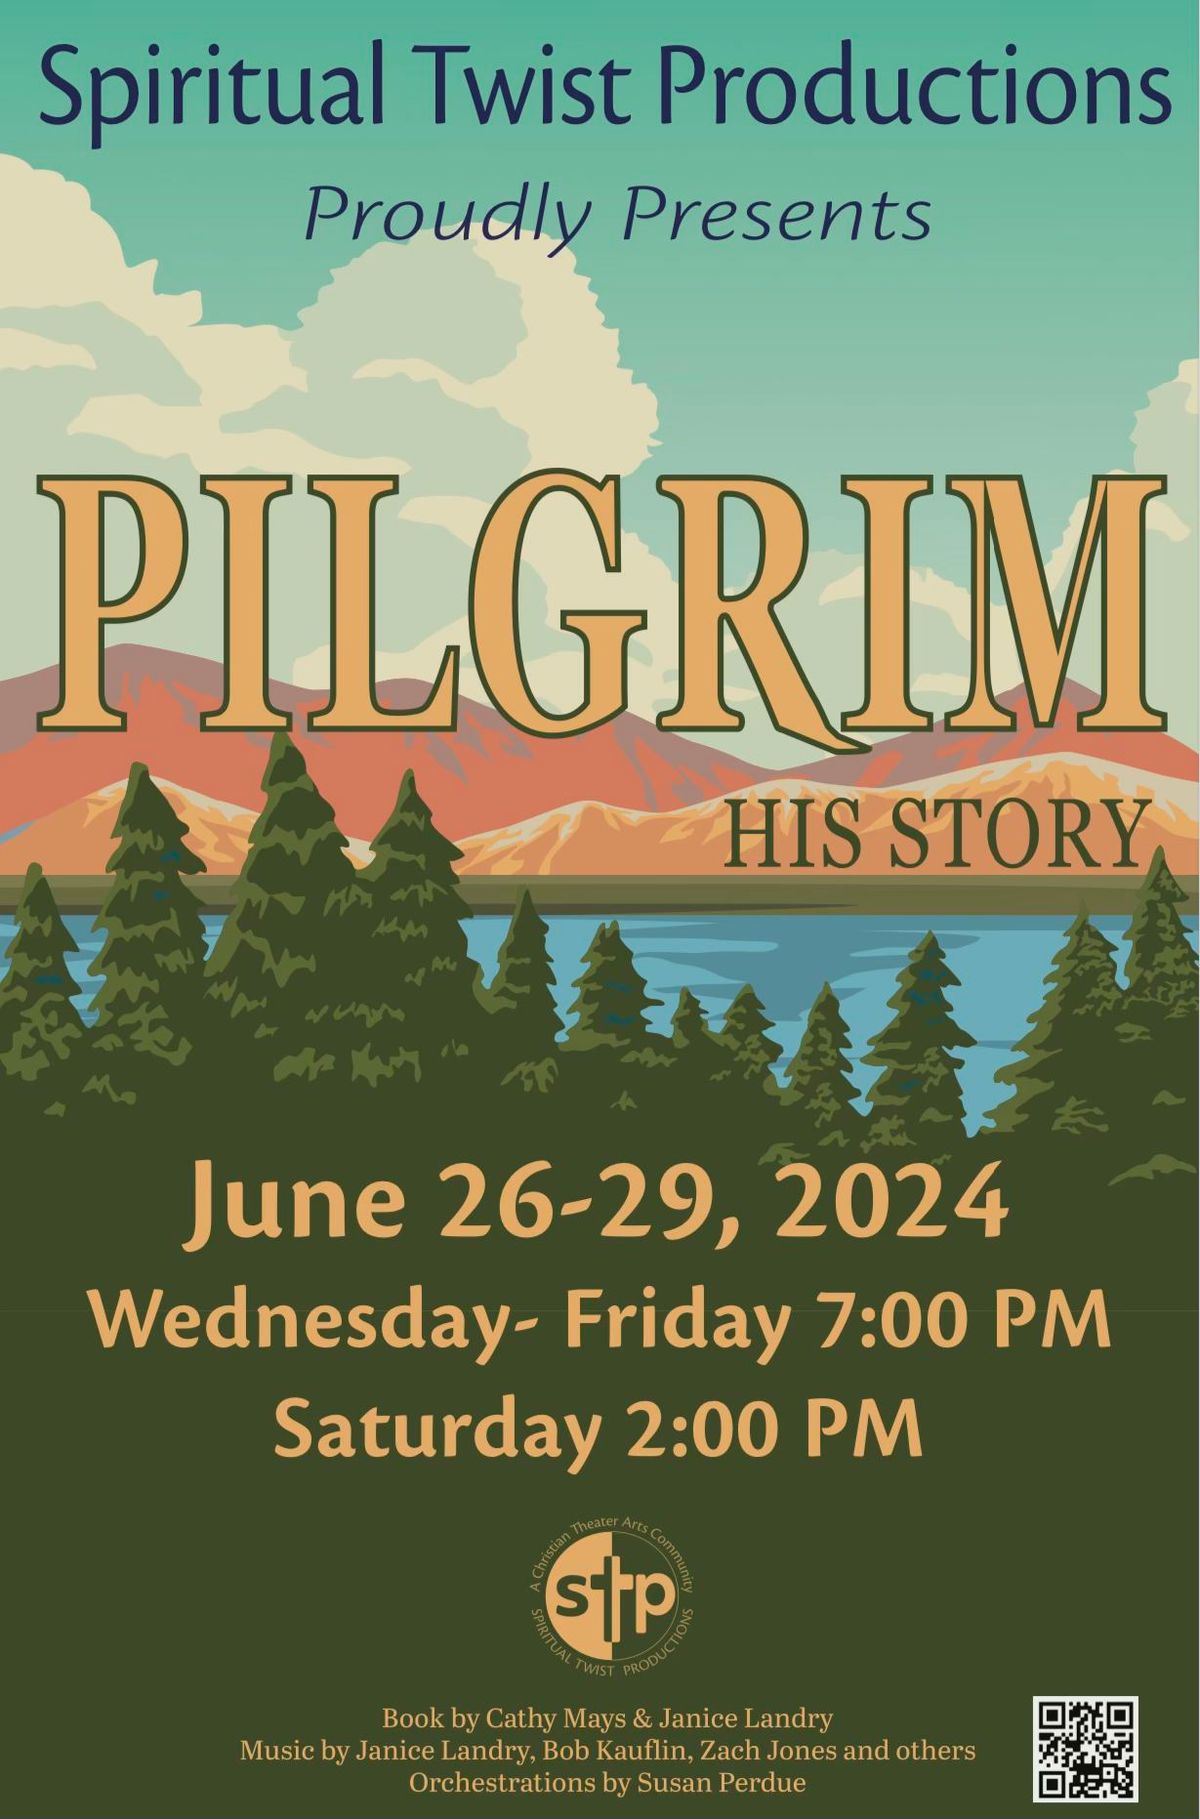 Pilgrim - His Story